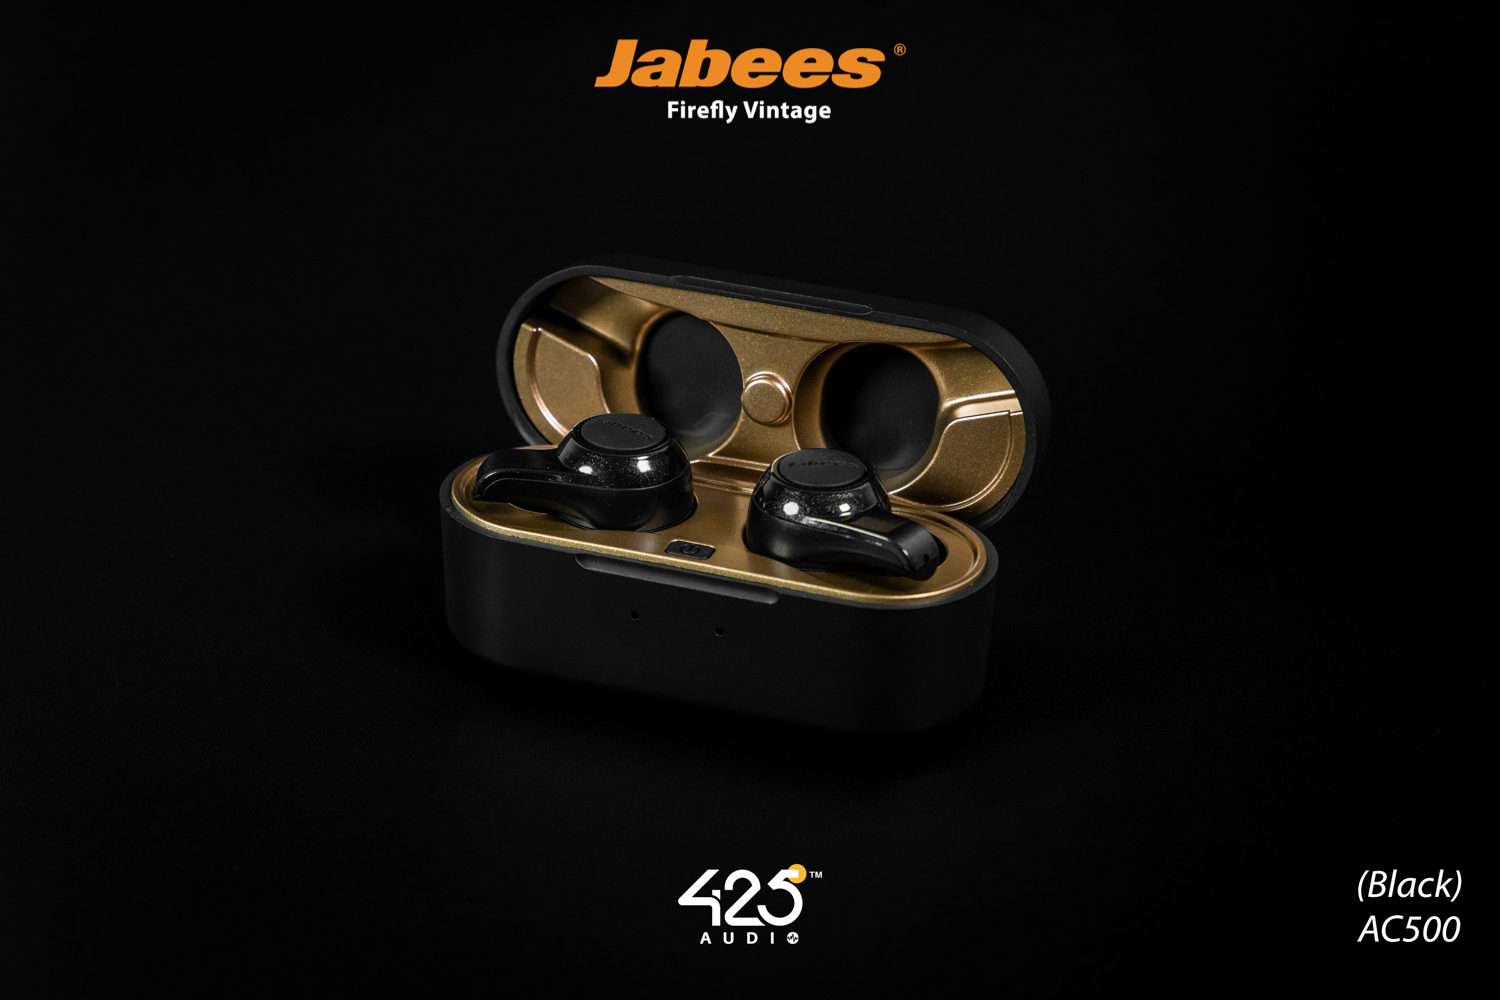 jabees firefly vintage,true wireless,gaming,gaming mode,เสียงดี,ไมค์ชัด,เล่นเกมส์ไม่ดีเลย์,ดูหนังไม่ดีเลย์,in-ear,black,bronze